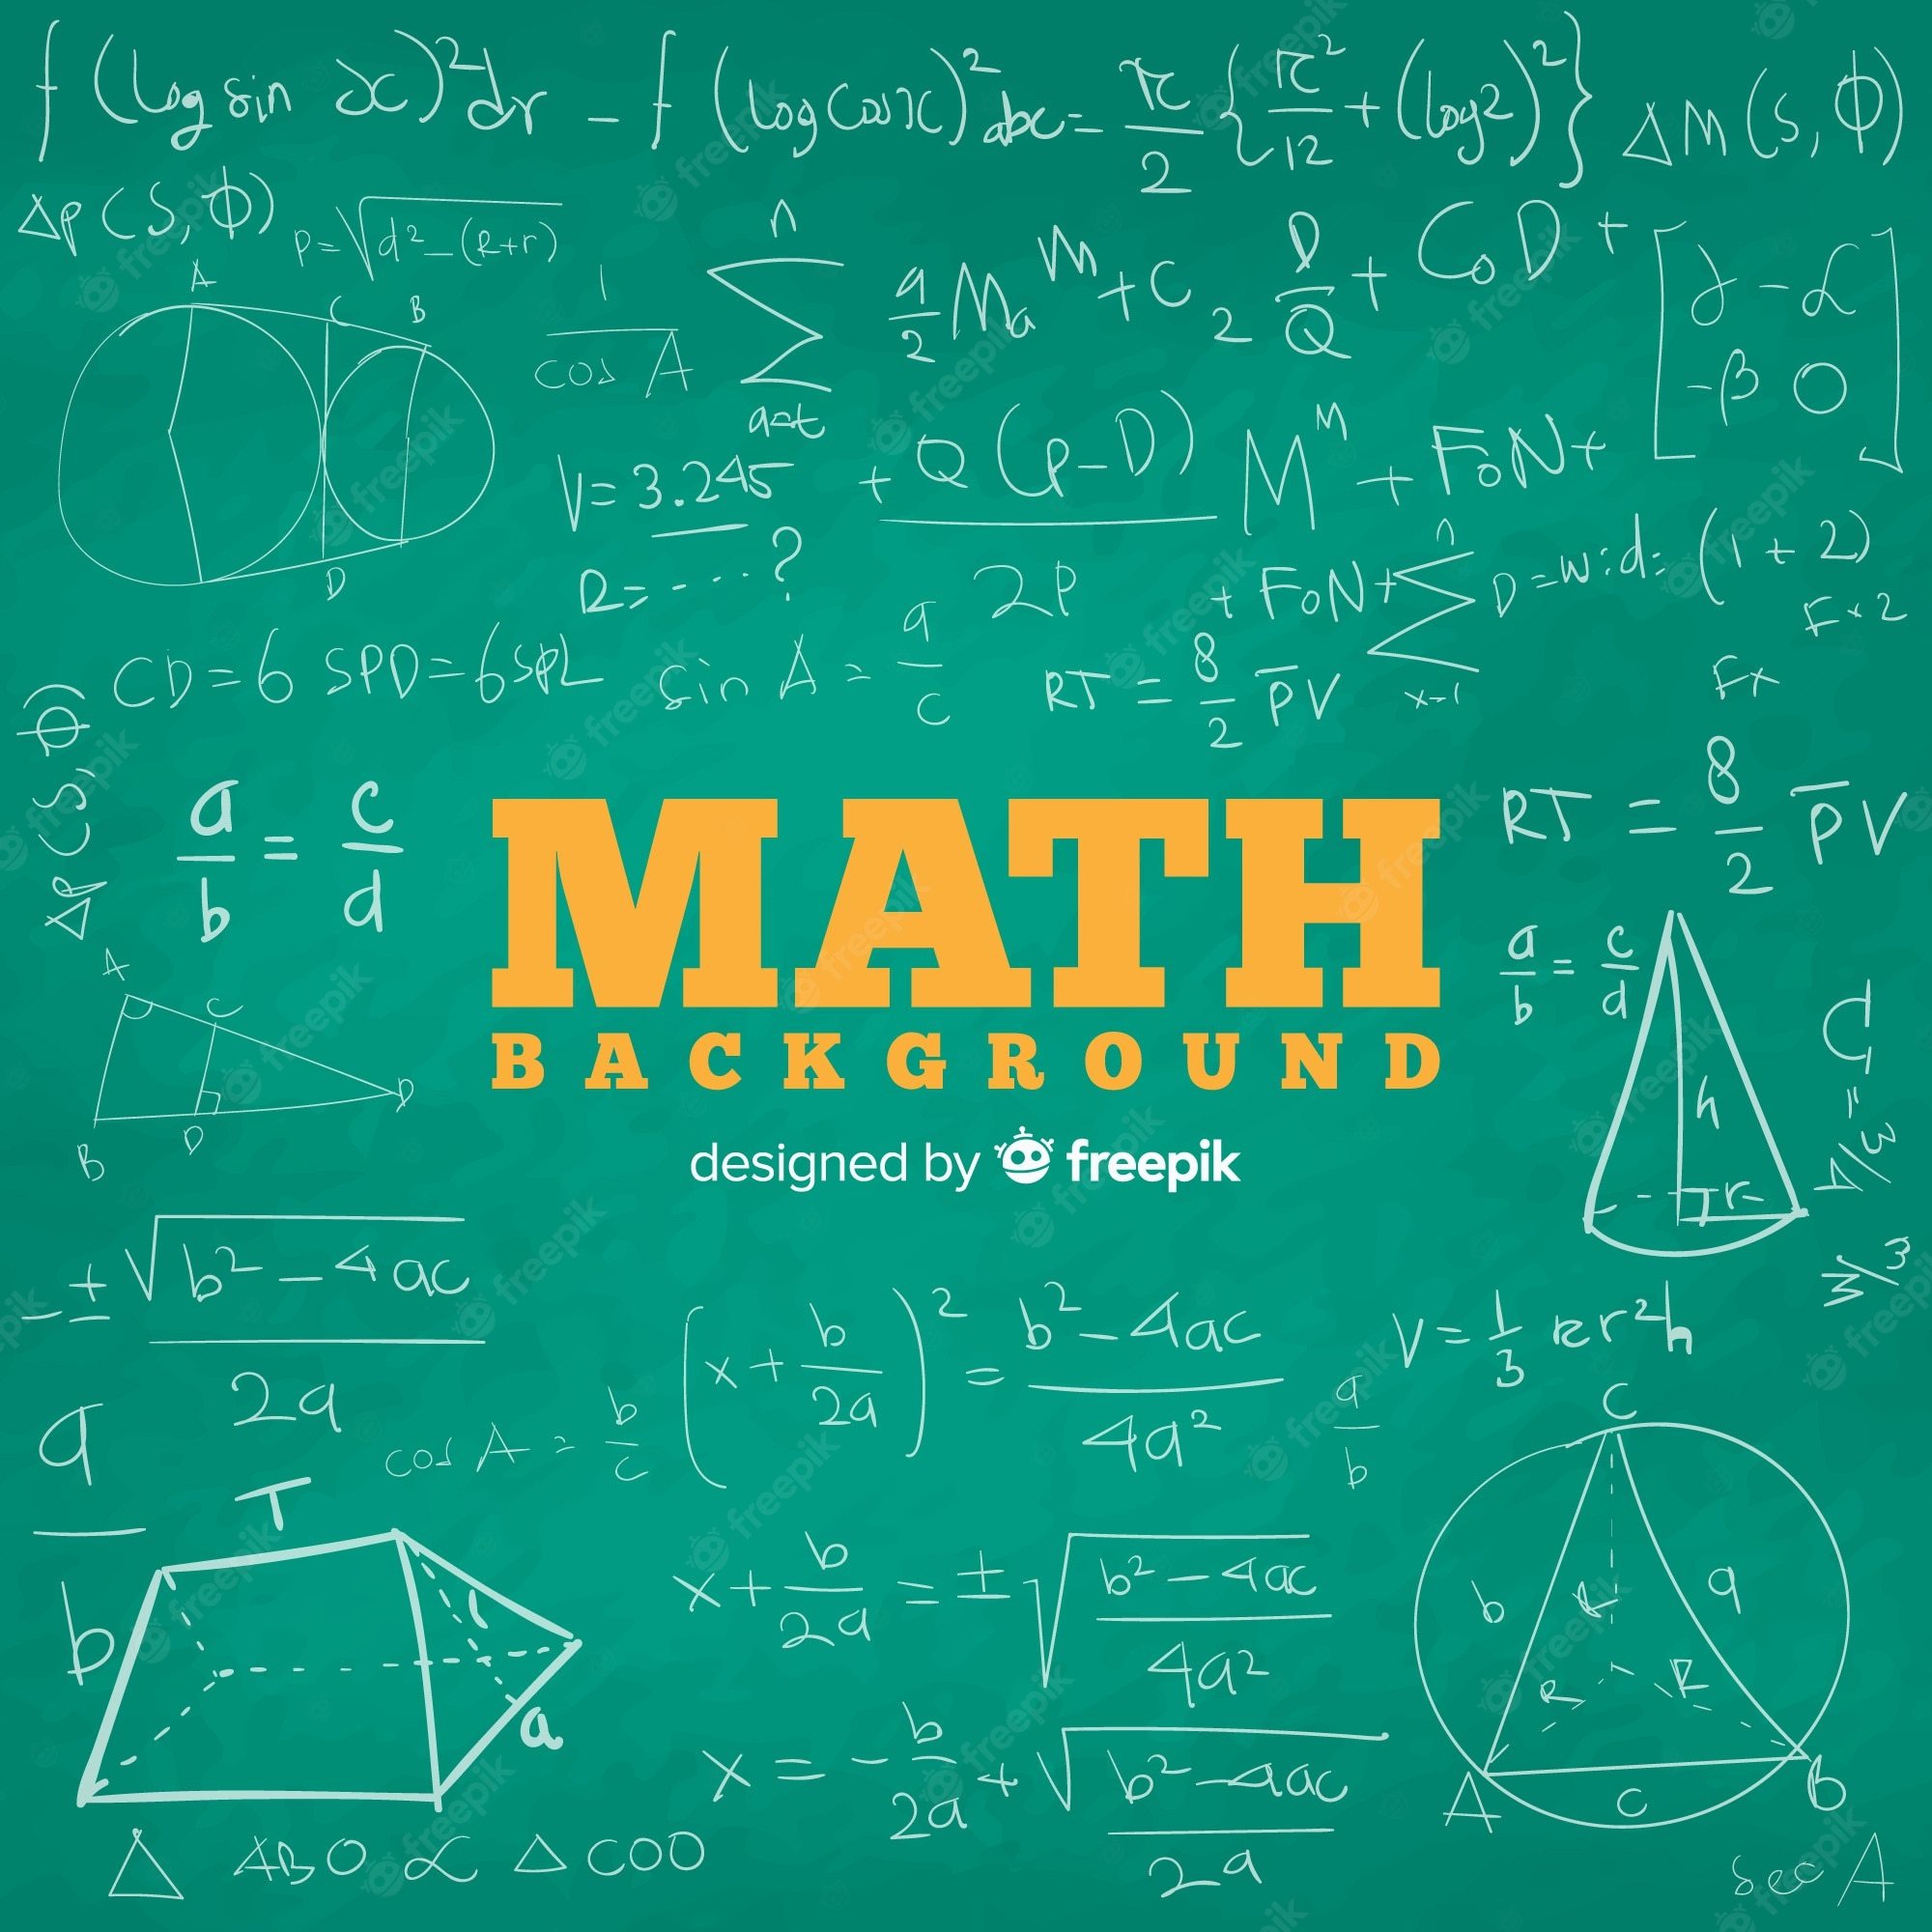 Math Word Problems - Year 7 - Quizizz